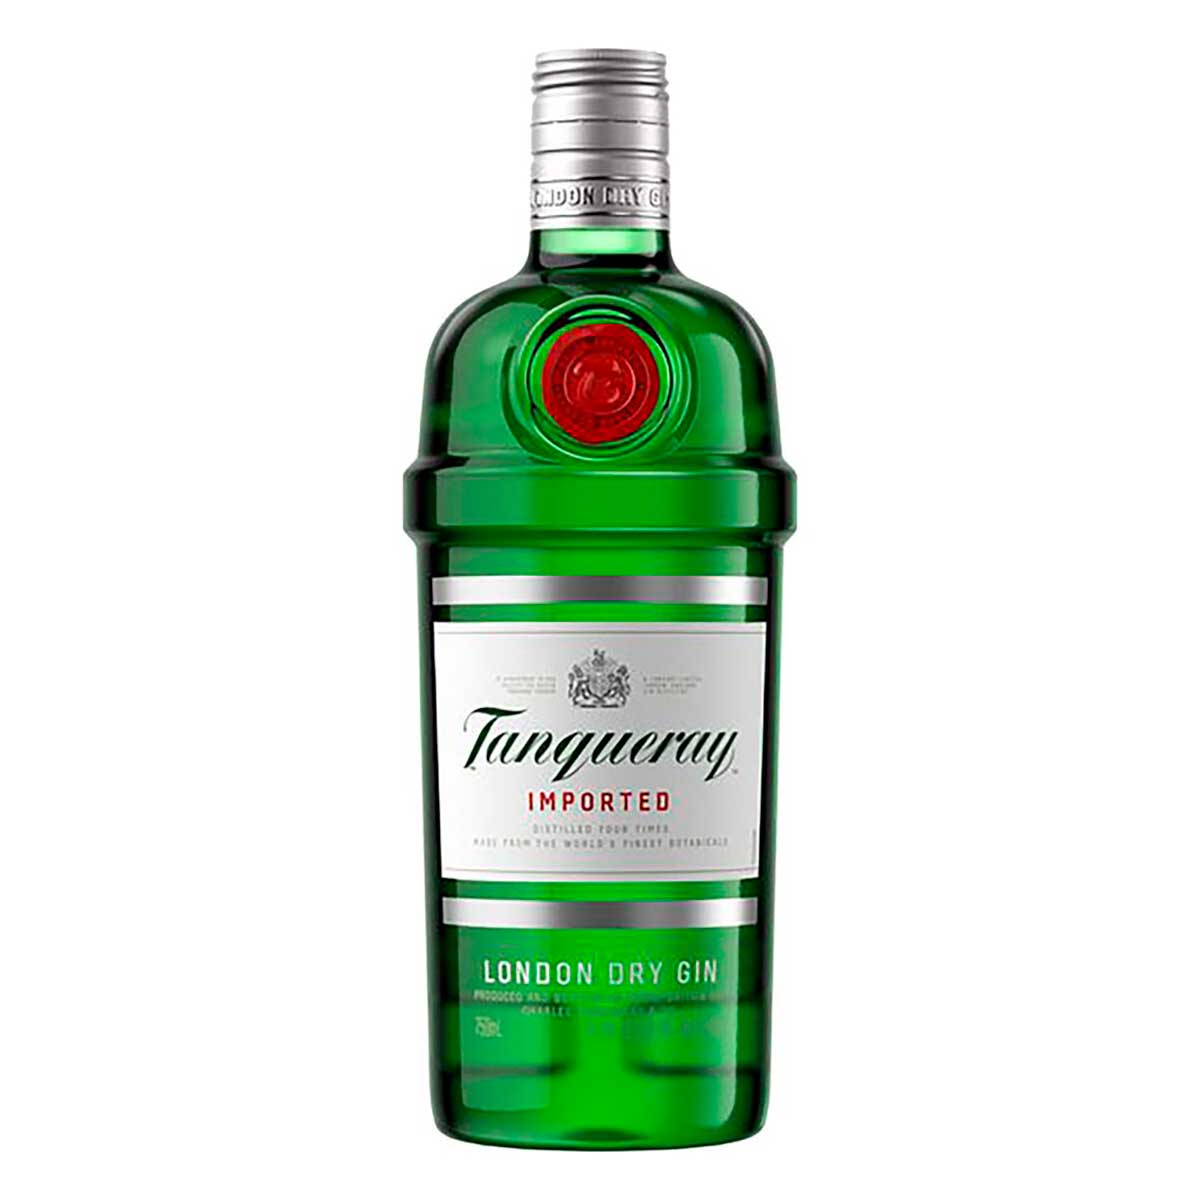 gin-tanqueray-london-dry-750ml-2-unidades-2.jpg